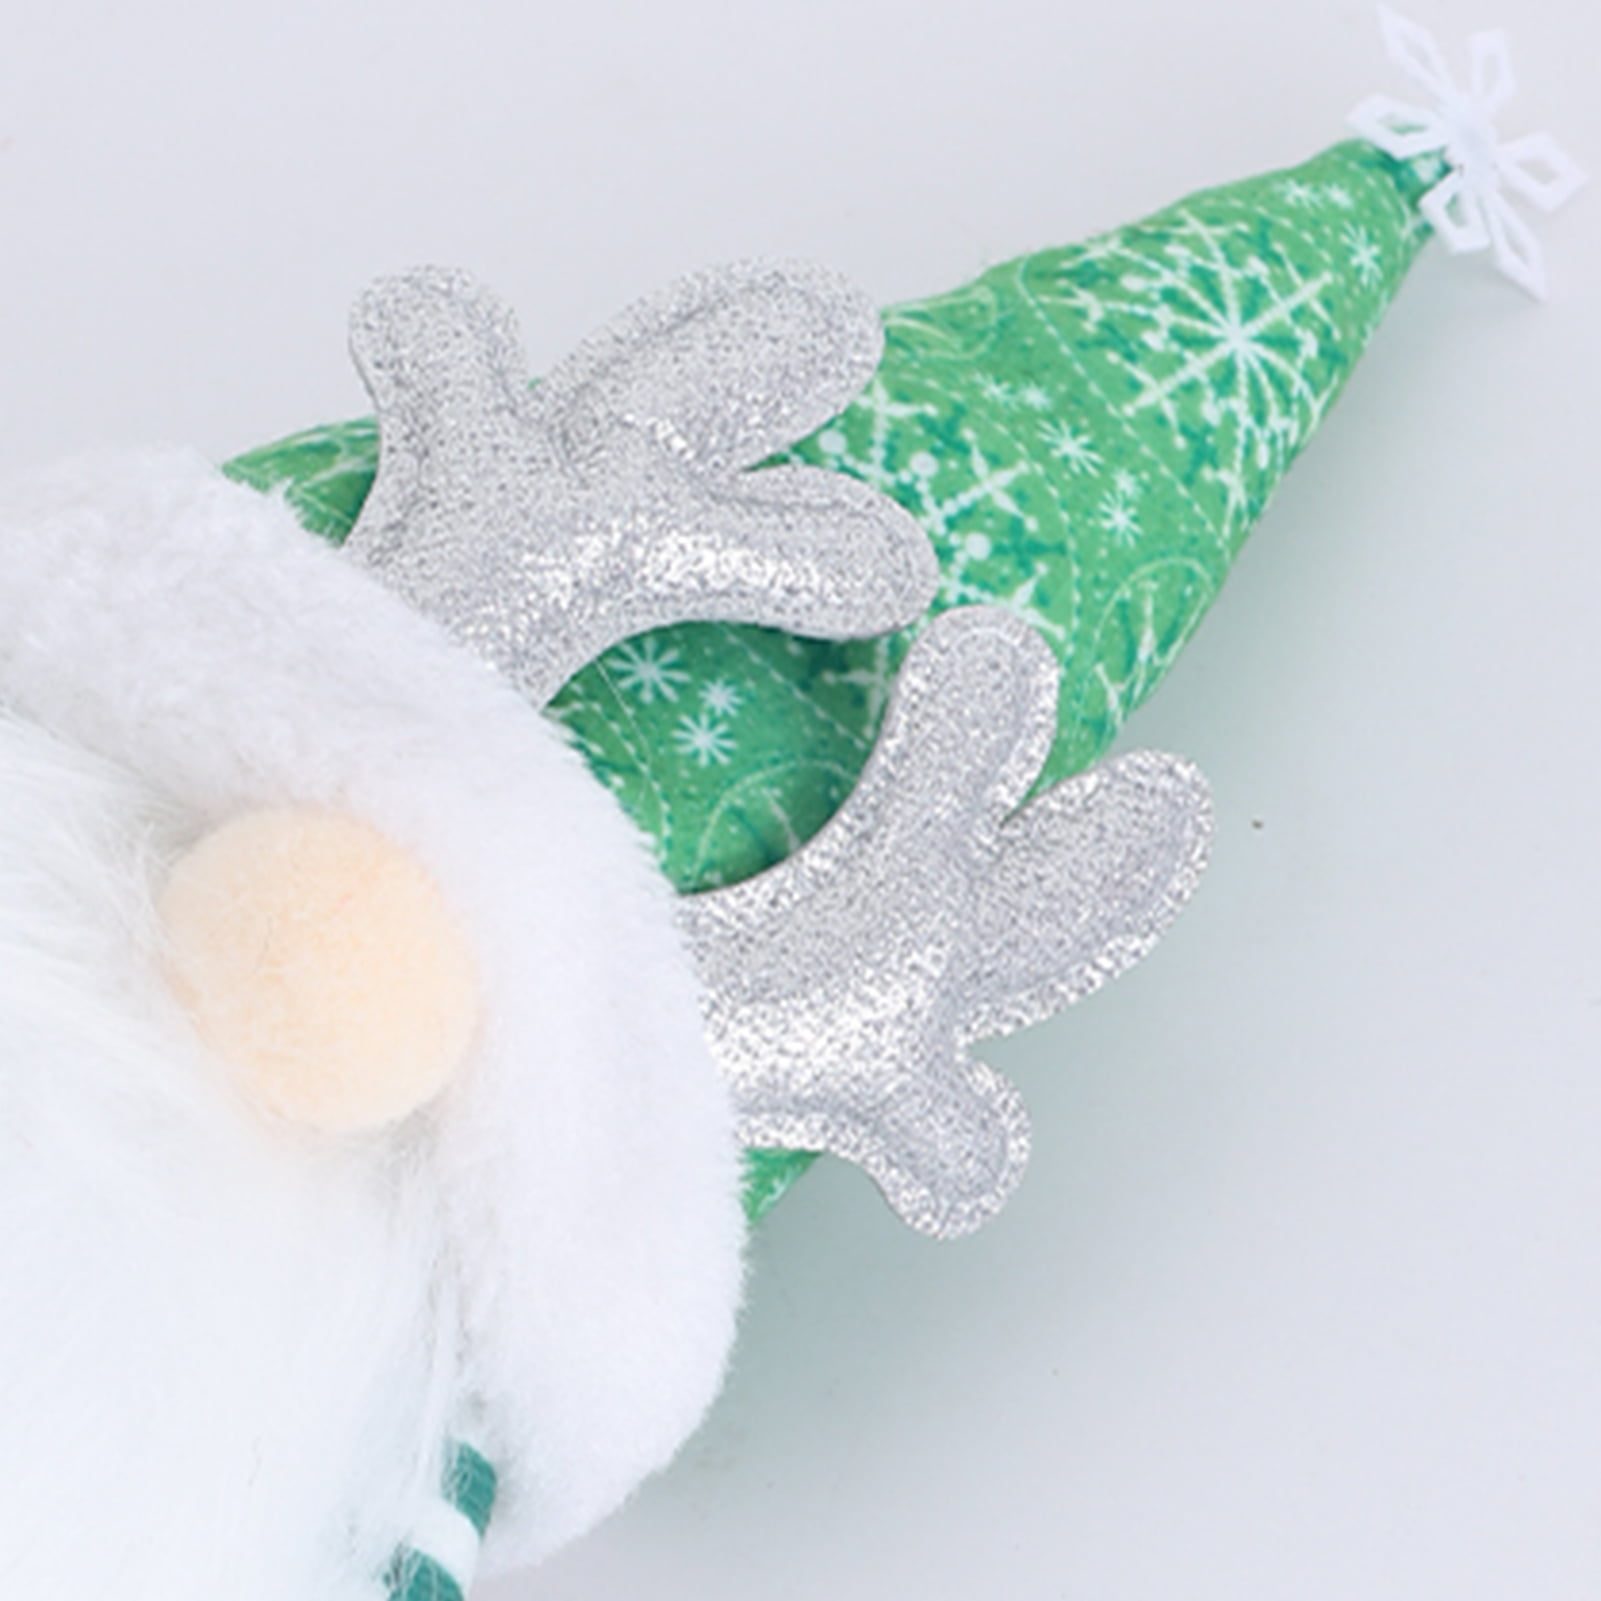 Christmas Gnome Plush w/ LED light (white hat) Home Décor